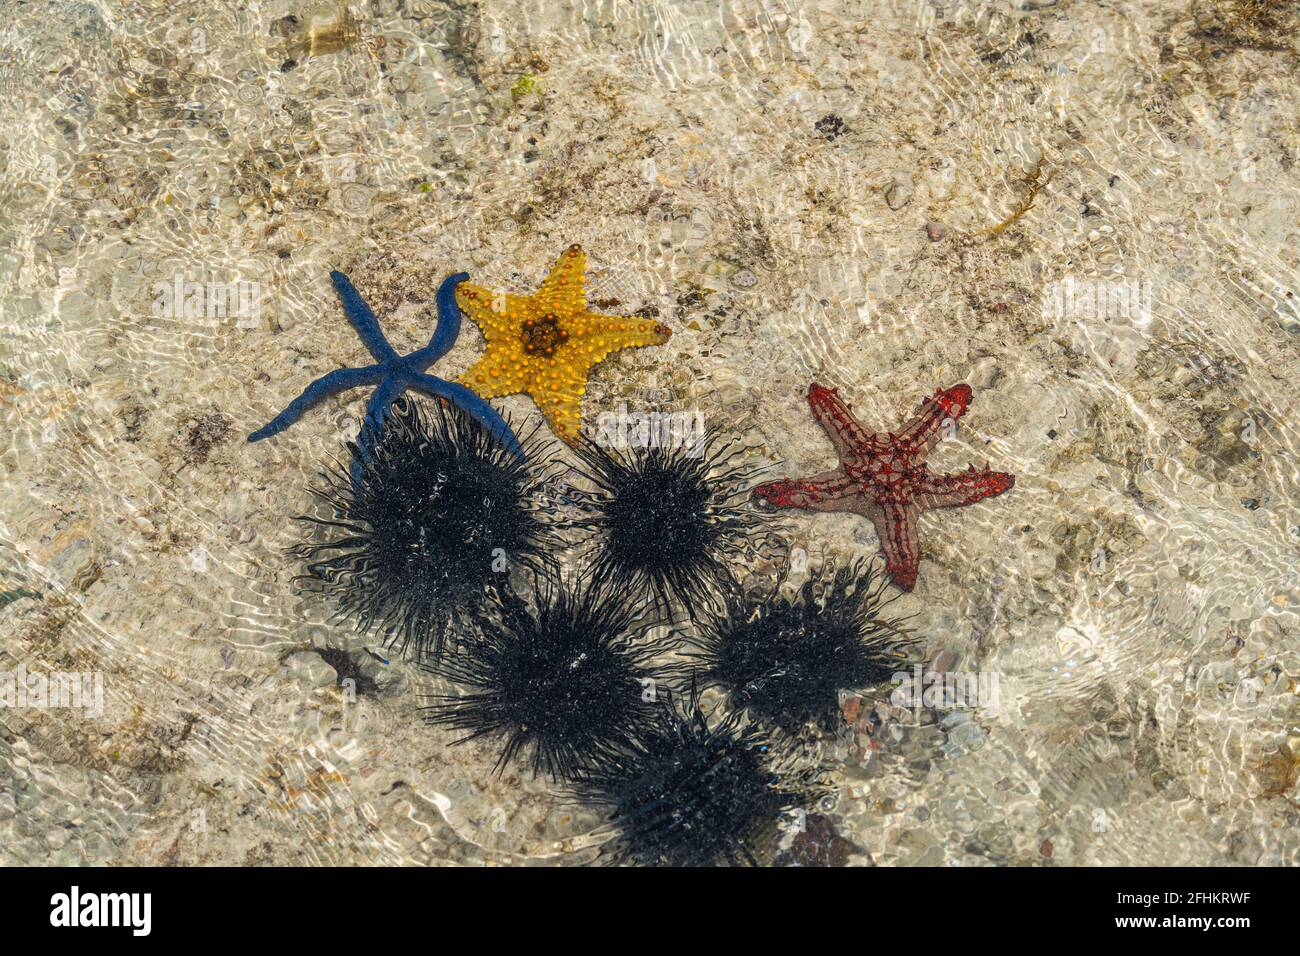 Orange, red and blue starfish and black urchin at low tide near the shore in water, Zanzibar, Tanzania Stock Photo